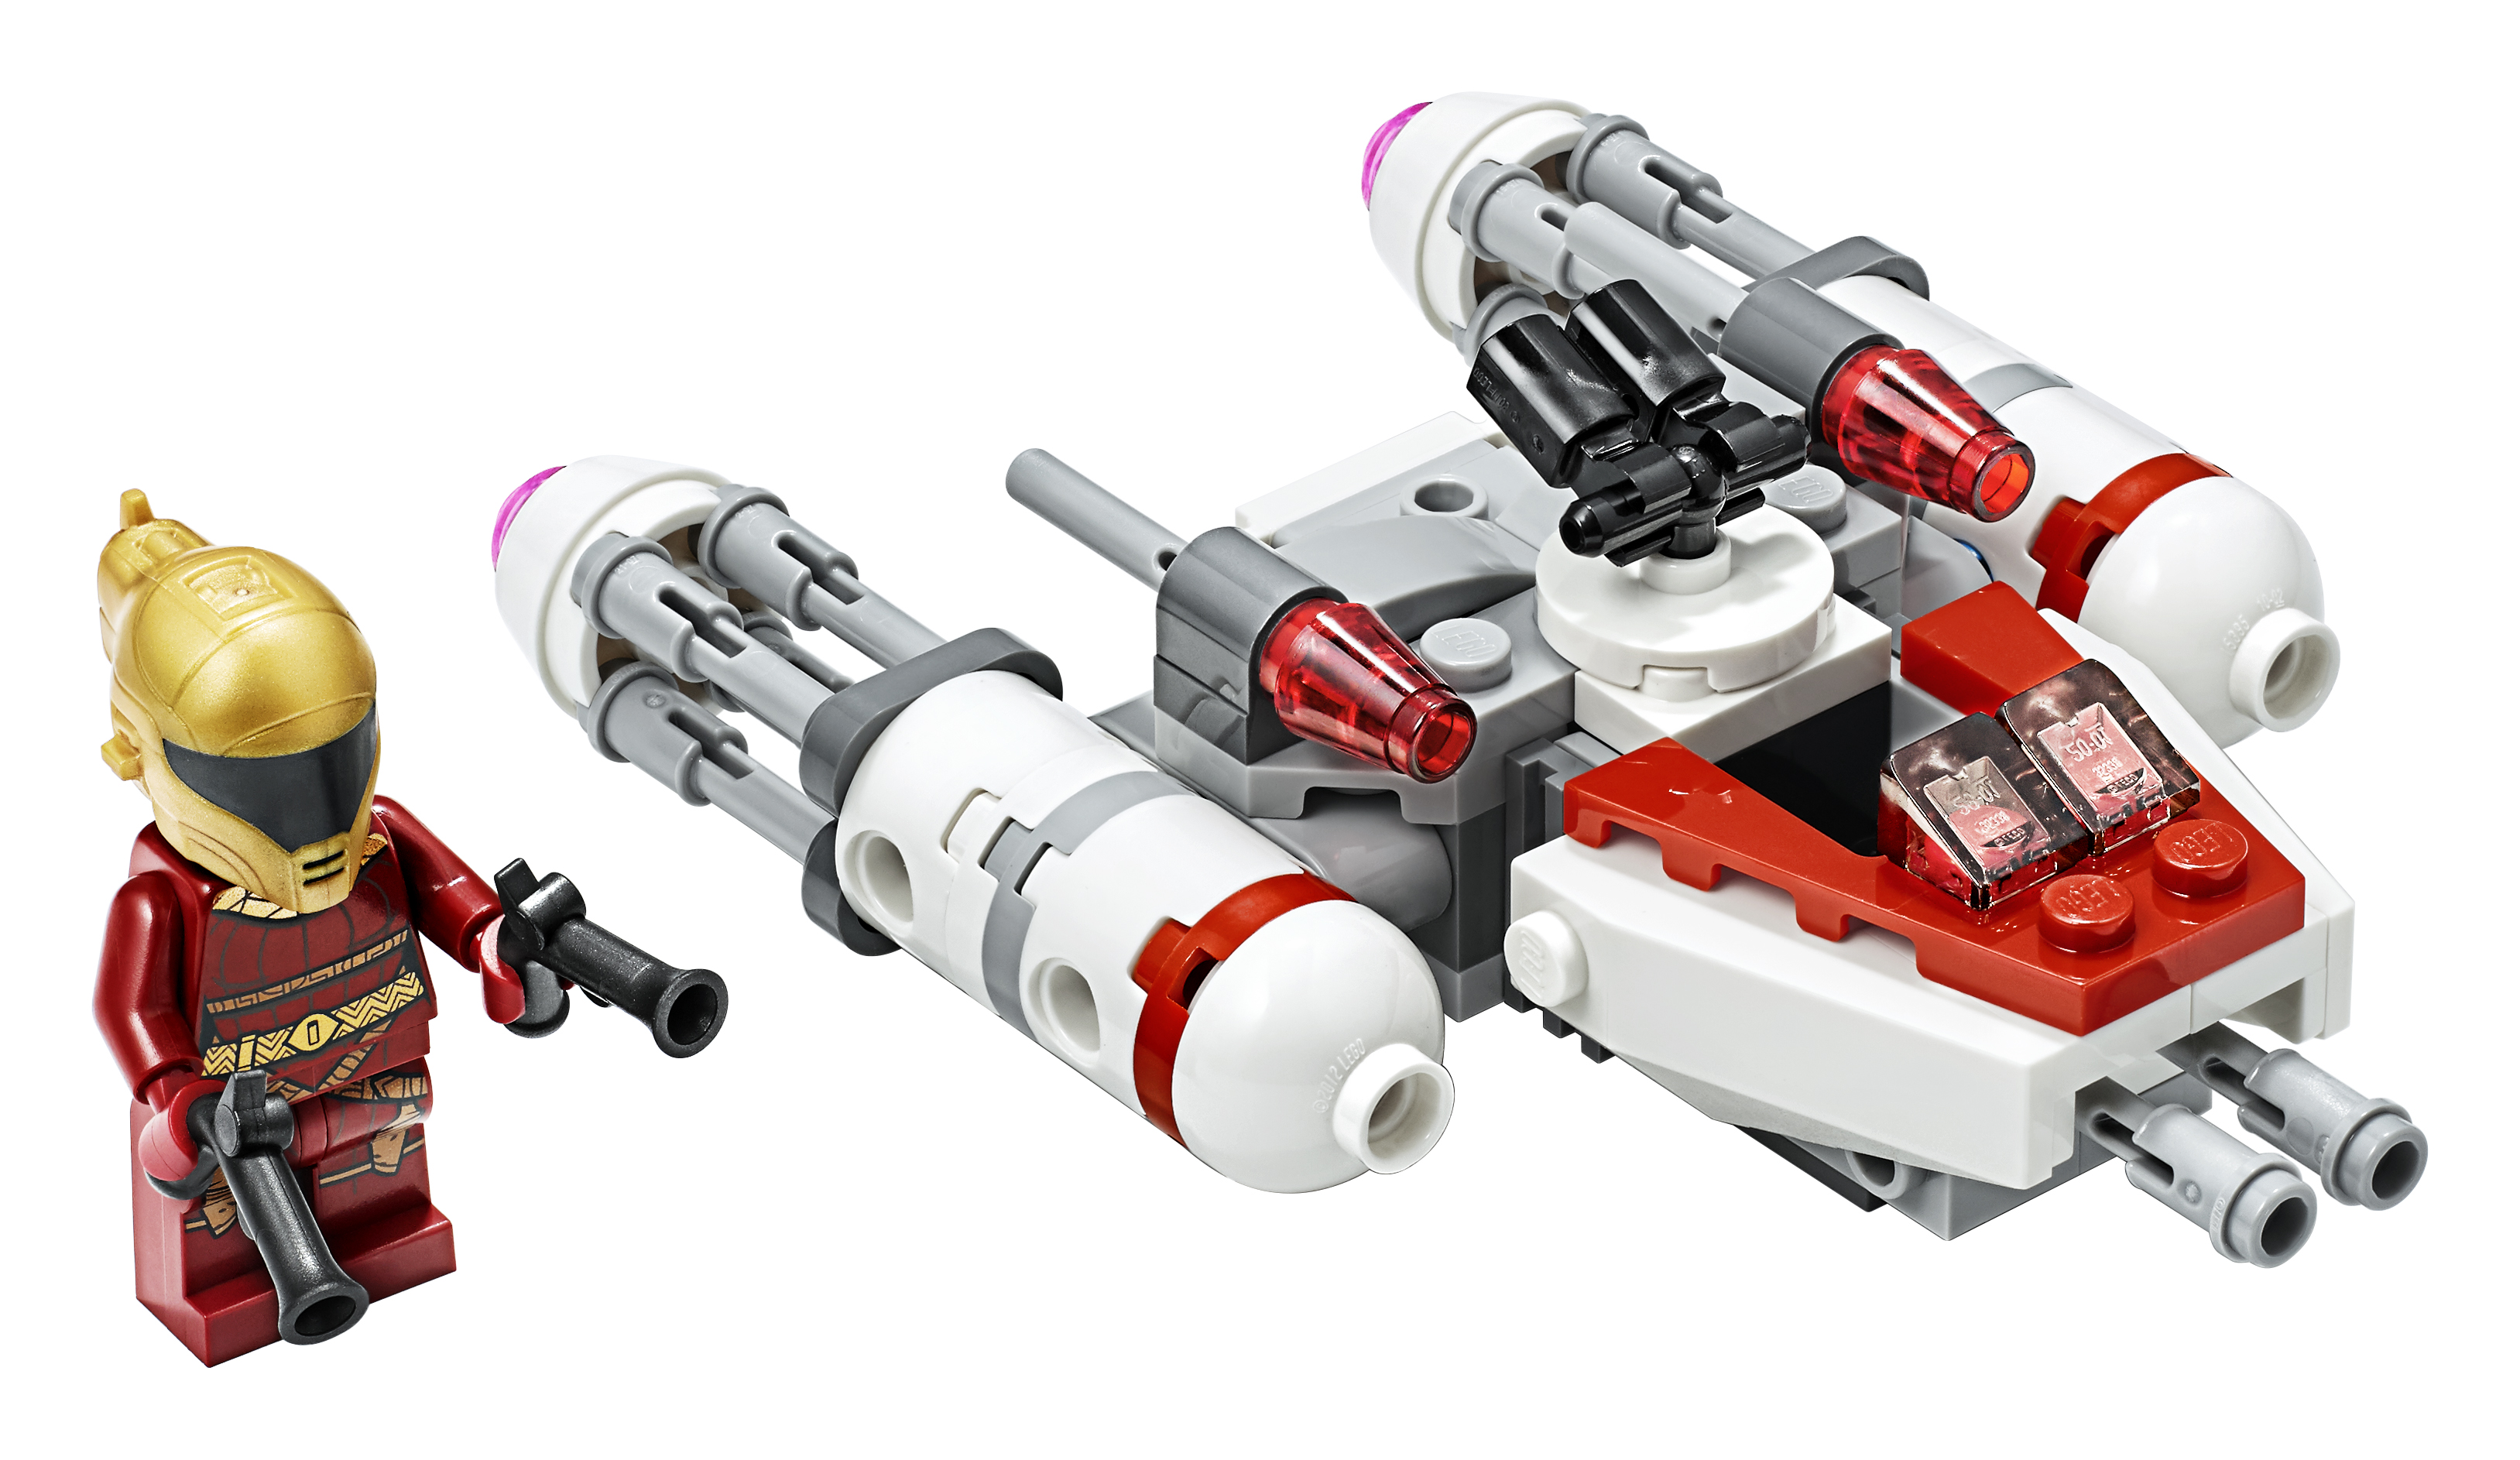 TROS Resistance Y-wing Microfighter Lego Set 3